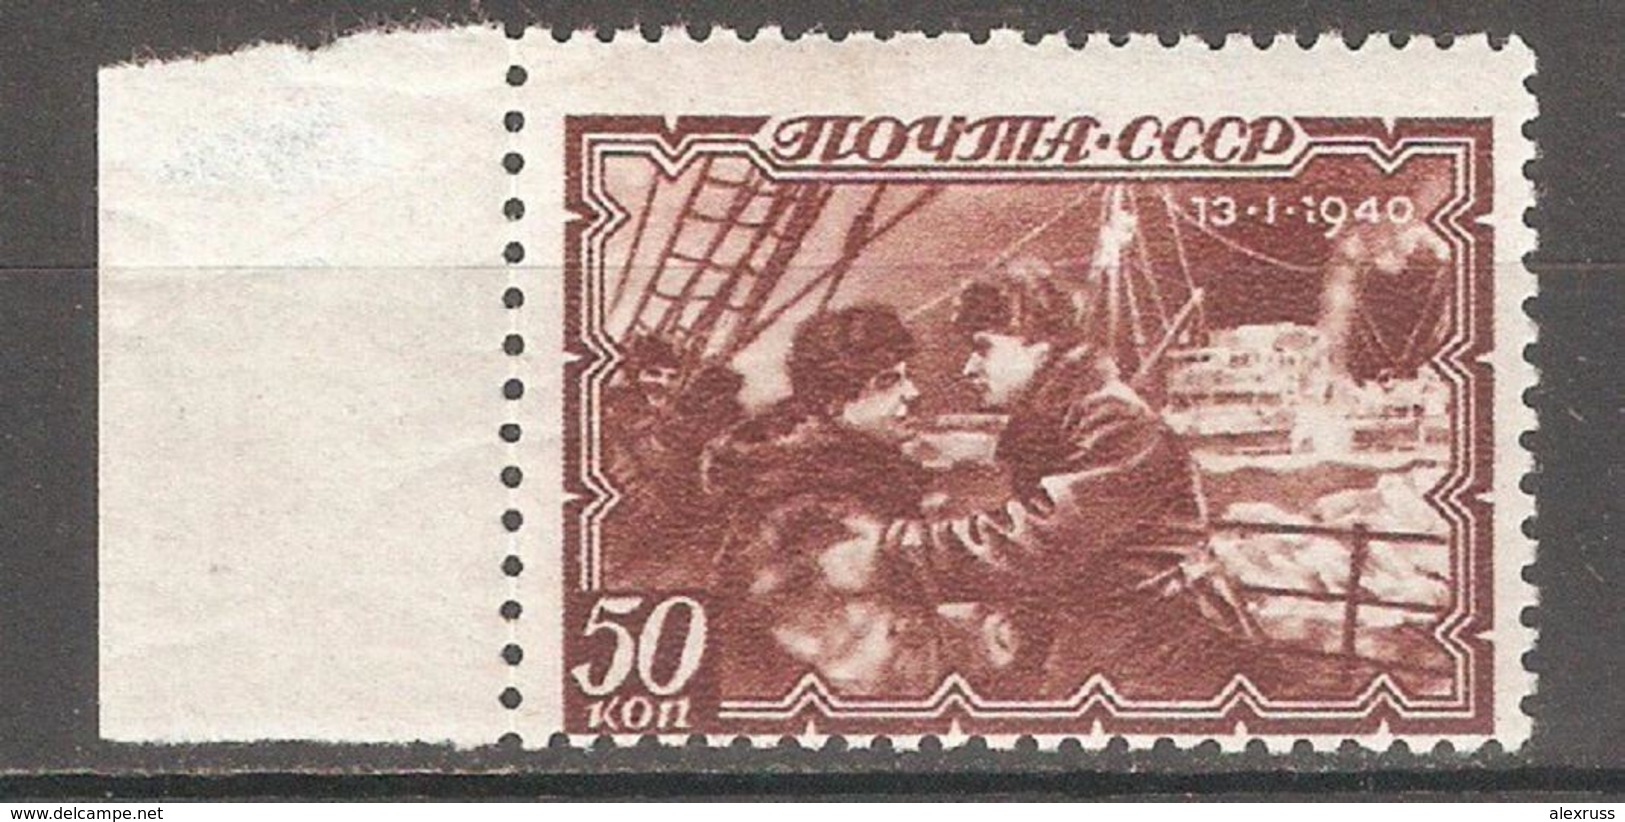 Russia/USSR 1940, Sedov Crew, Polar Expedition, 50 Kop, Scott # 774, VF MNH**OG - Unused Stamps